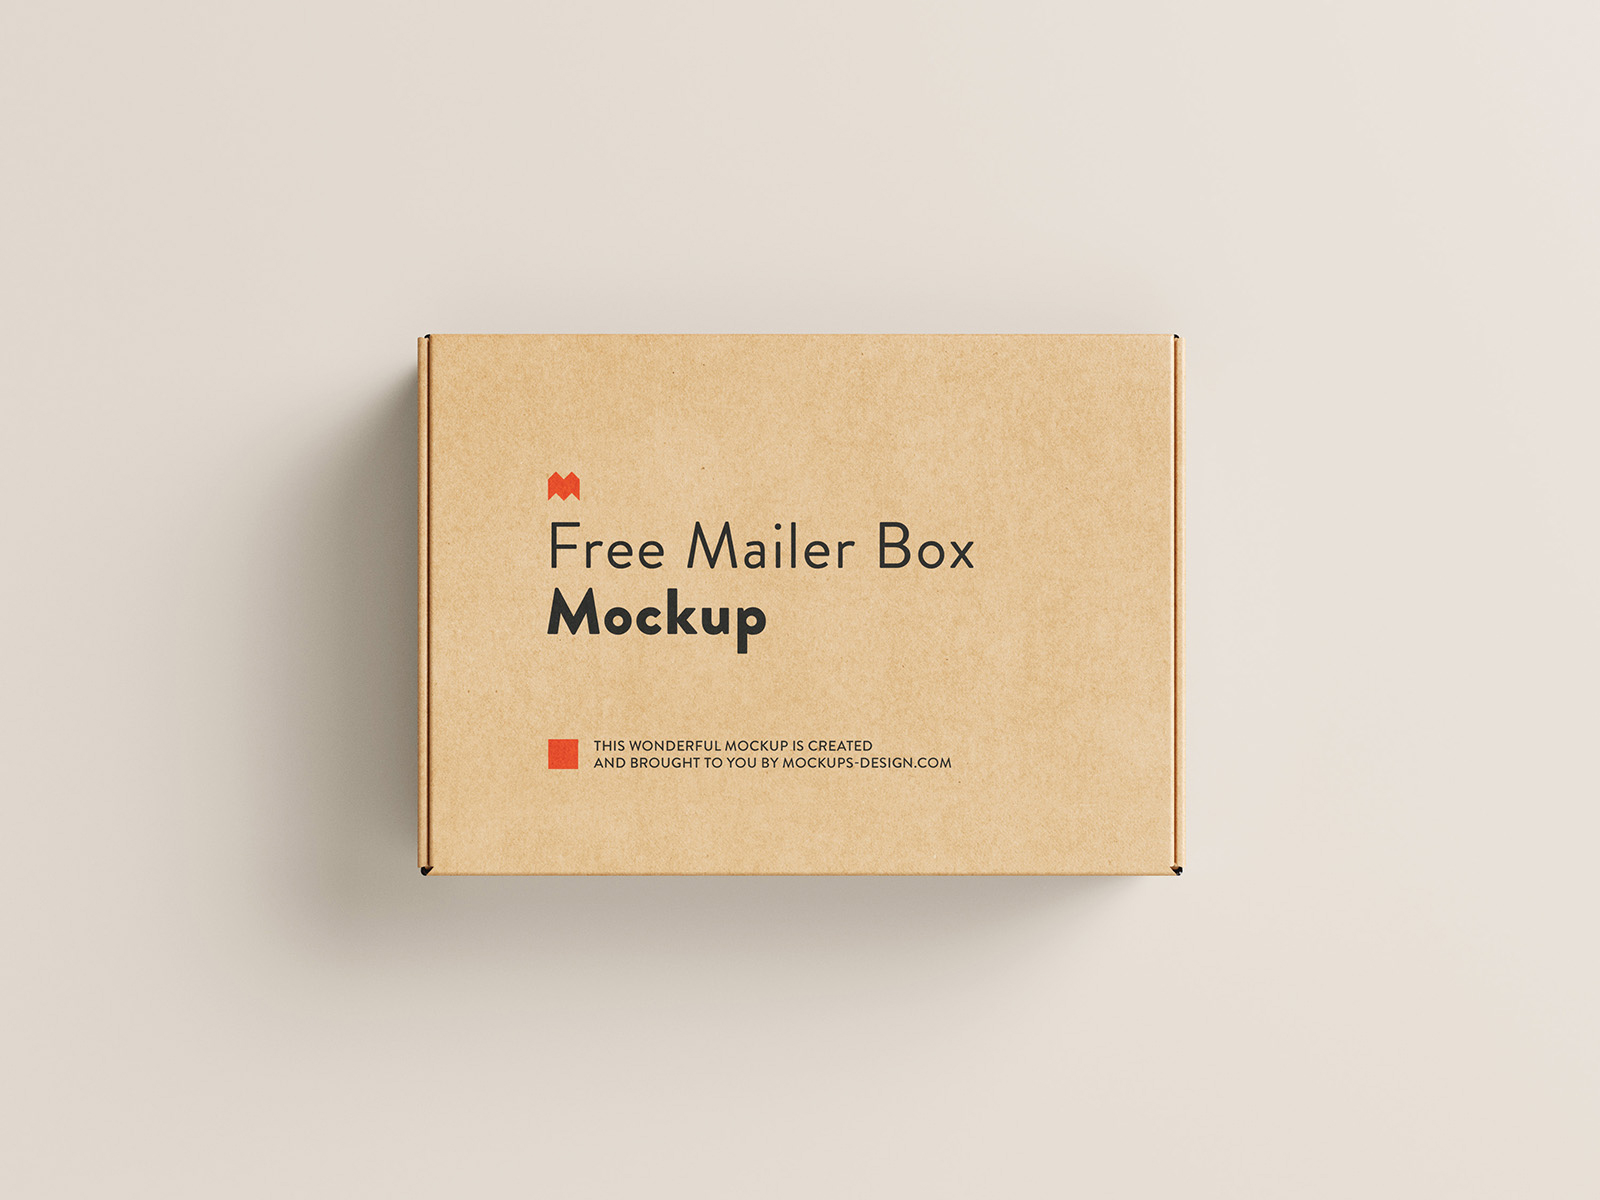 Free Mailer Box Mockup Set